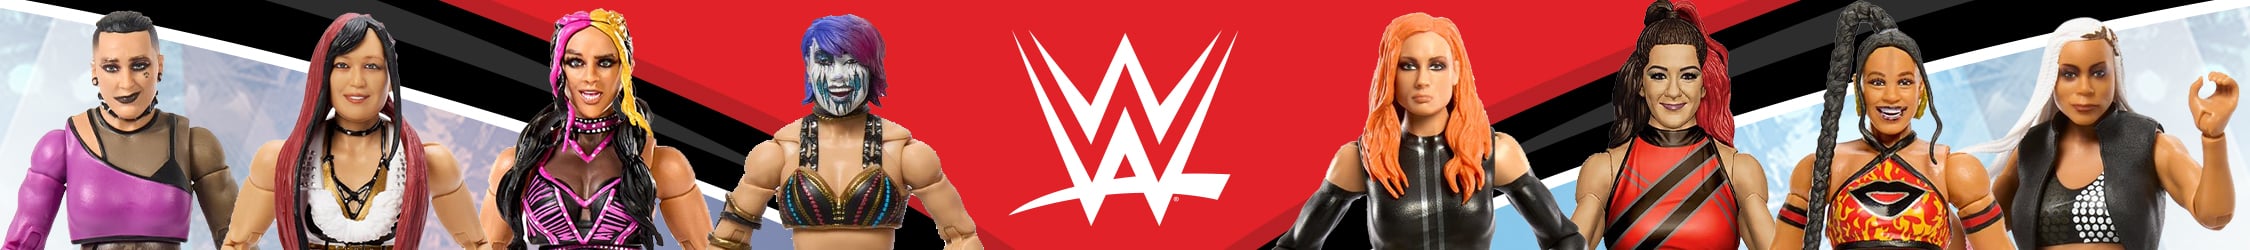 WWELandingPage1